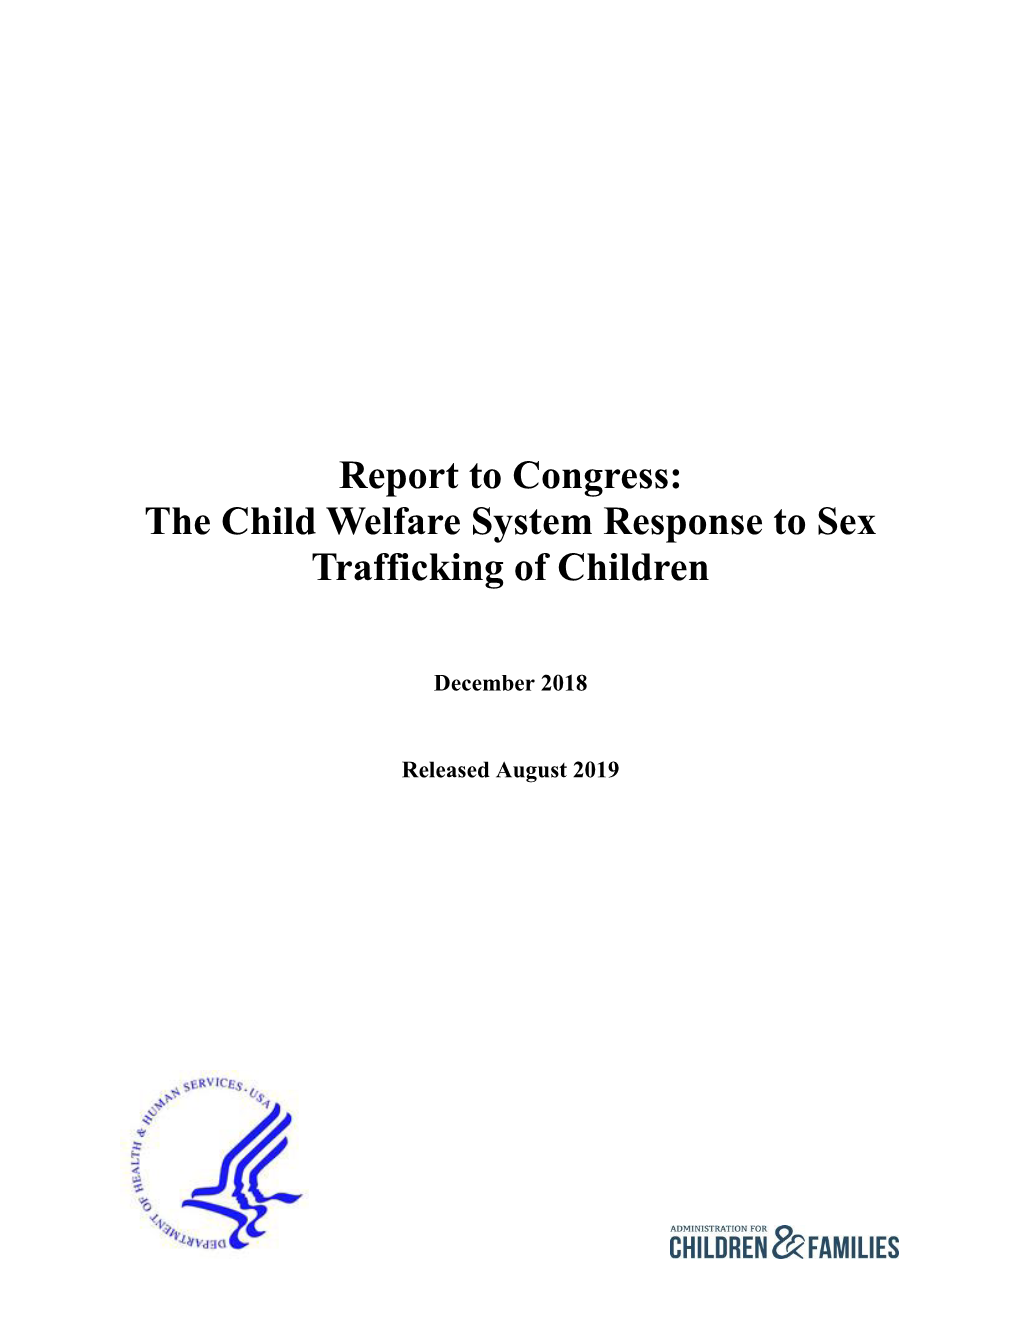 Child Welfare System Response to Sex Trafficking of Children